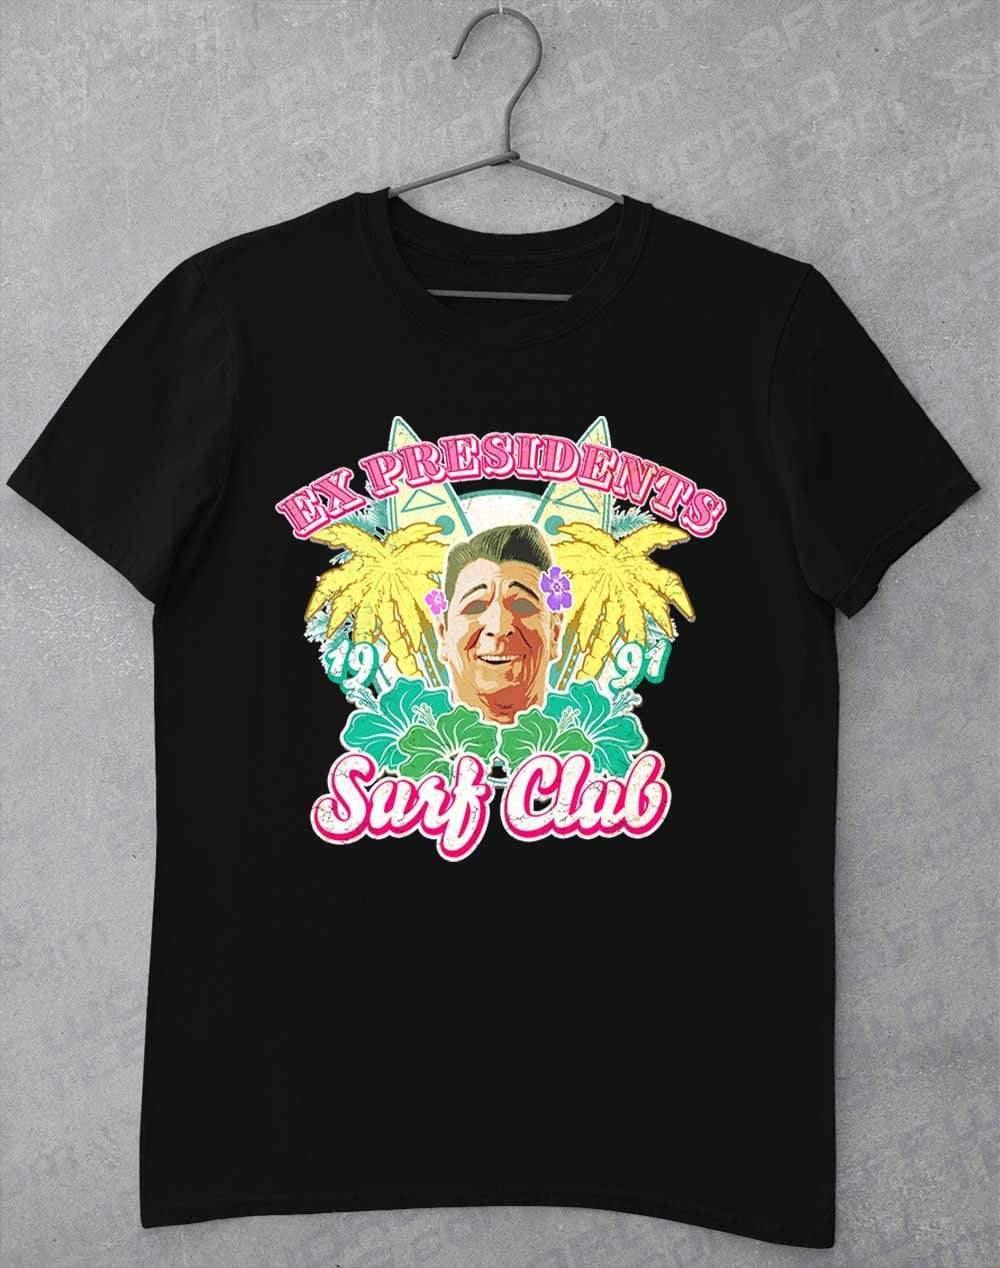 Ex Presidents Surf Club T-Shirt S / Black  - Off World Tees